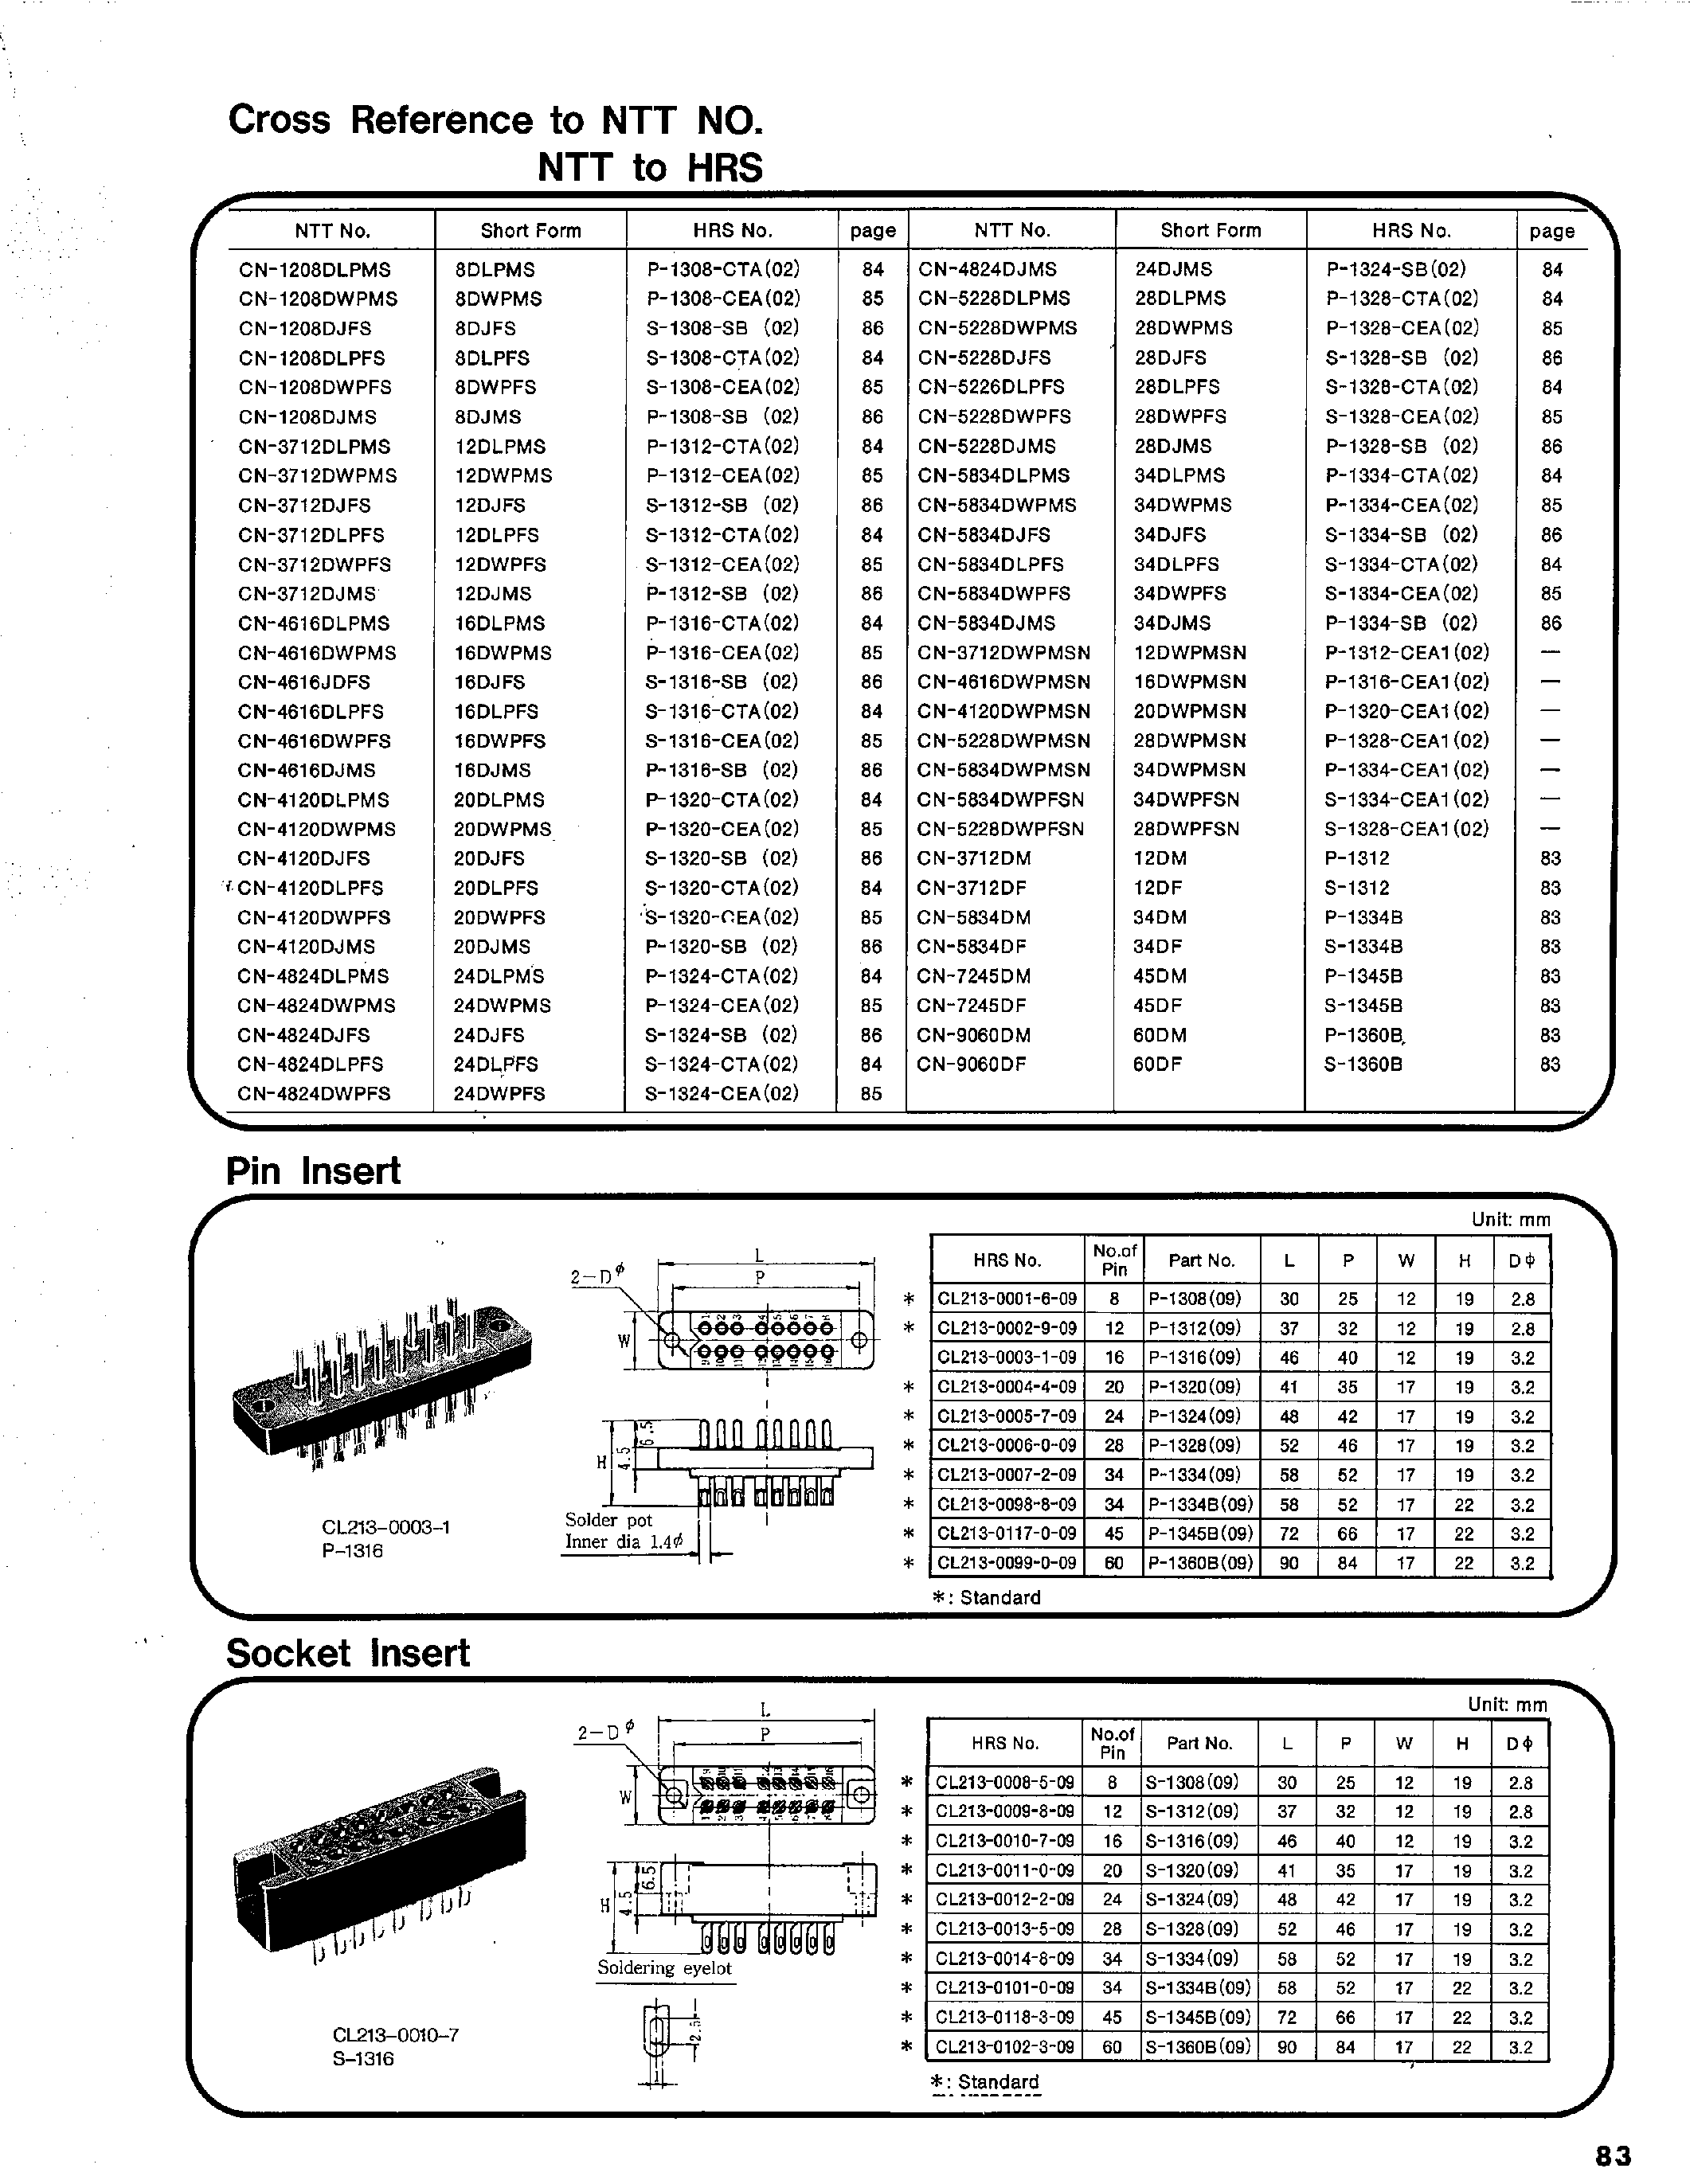 Datasheet P-1320-CE - 1300 SERIES RECTANGULAR CONNECTORS page 2